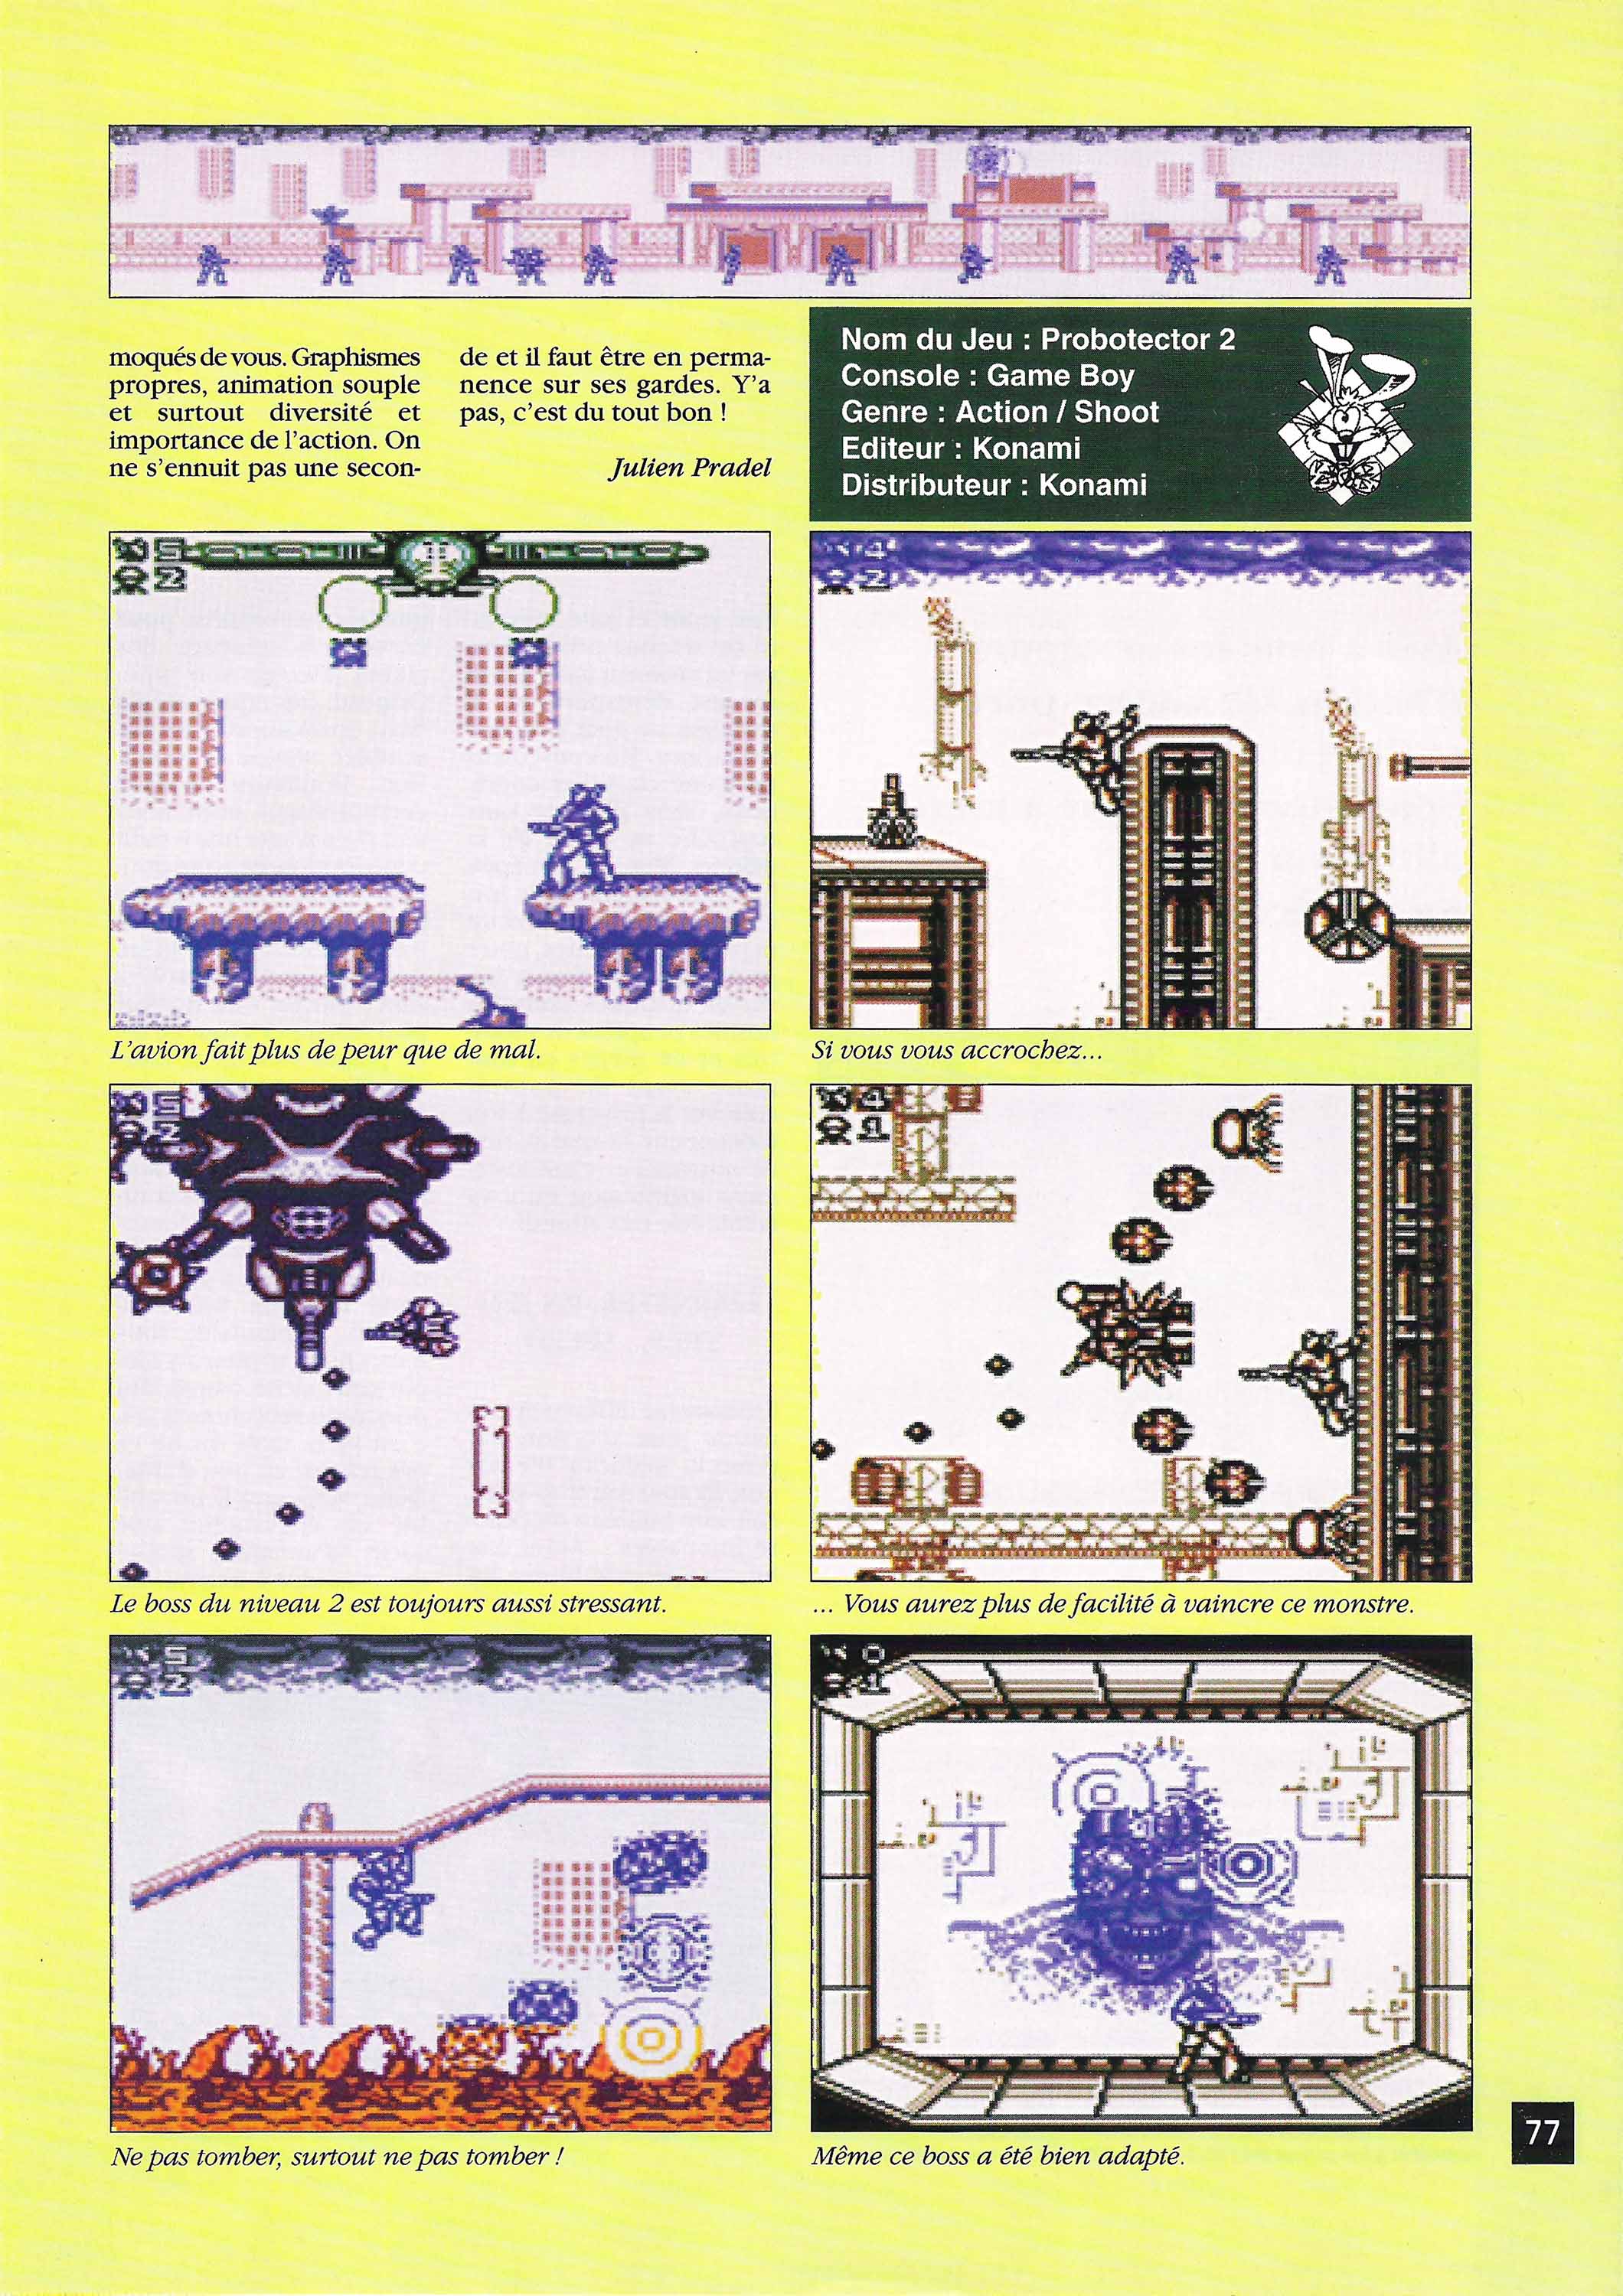 tests//177/Micro Kids Multimedia 01 - Page 077 (1994-12).jpg